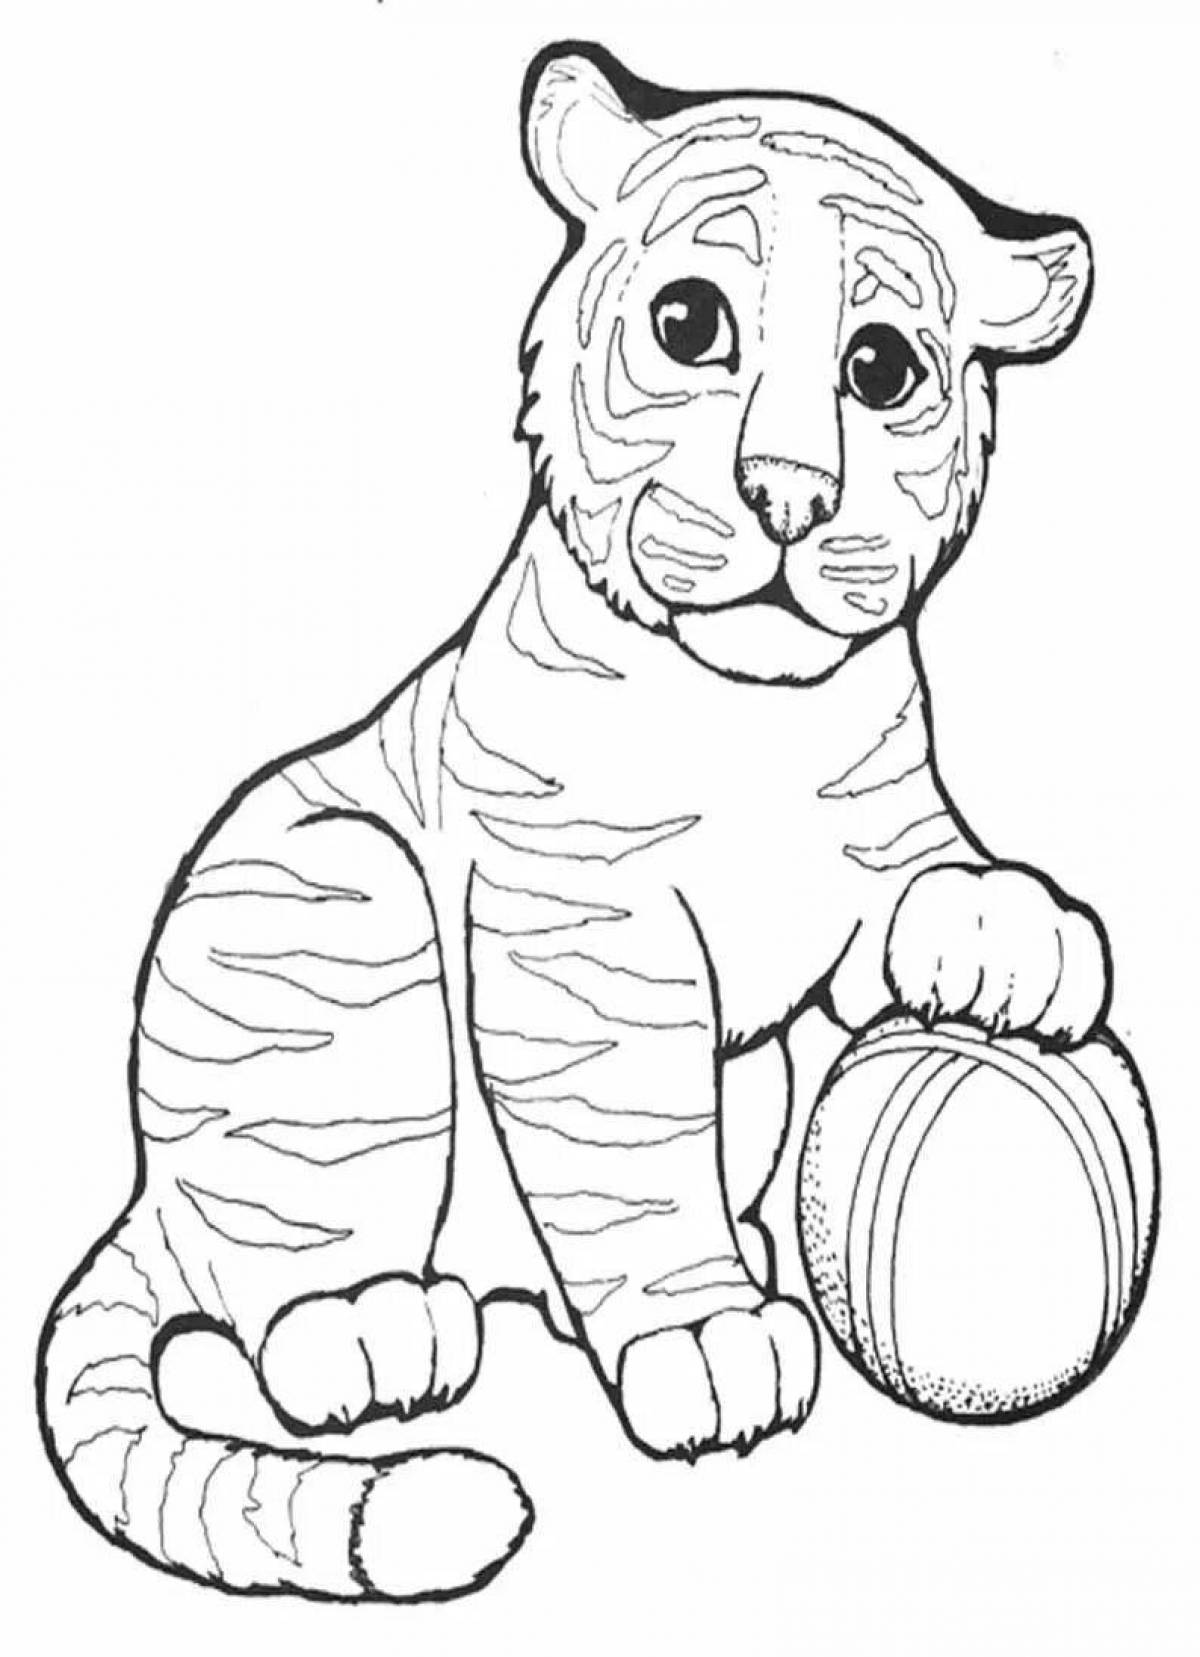 Impressive tiger coloring page for kids